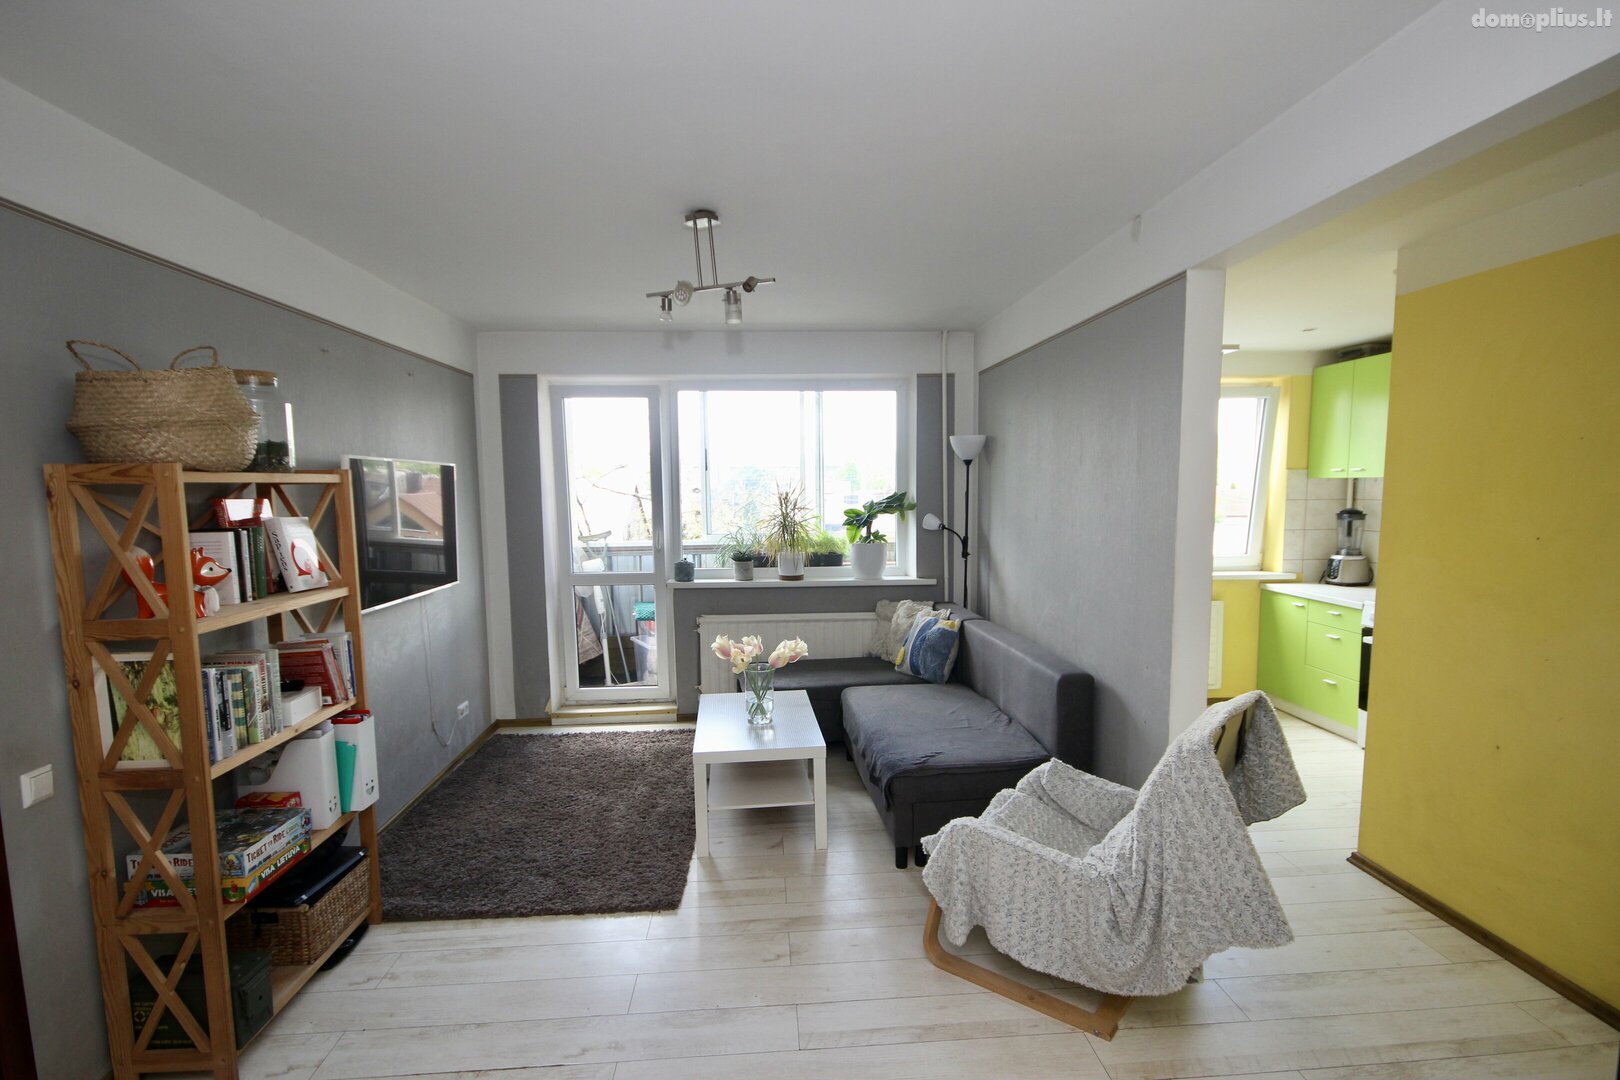 Продается 2 комнатная квартира Kaune, Vilijampolėje, Neries krant.